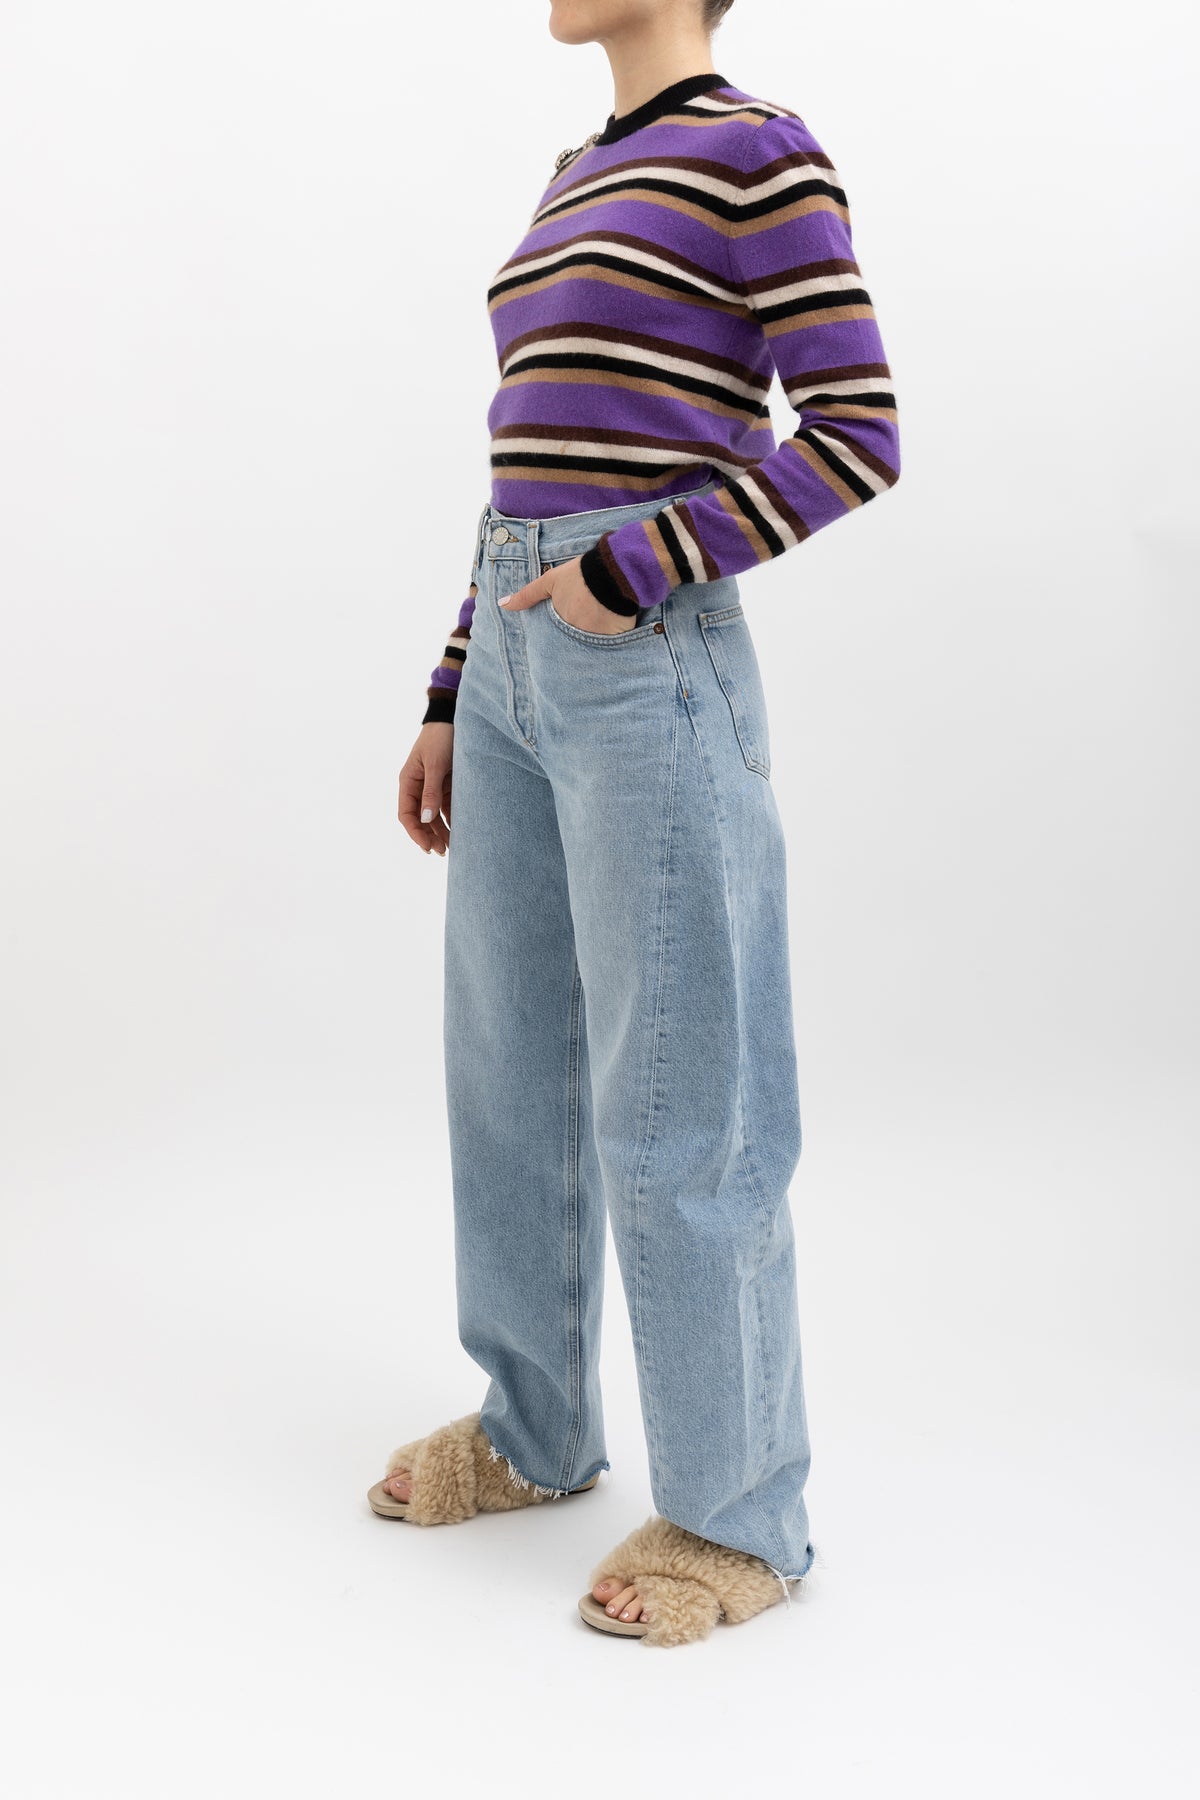 Cashmere Striped Sweater